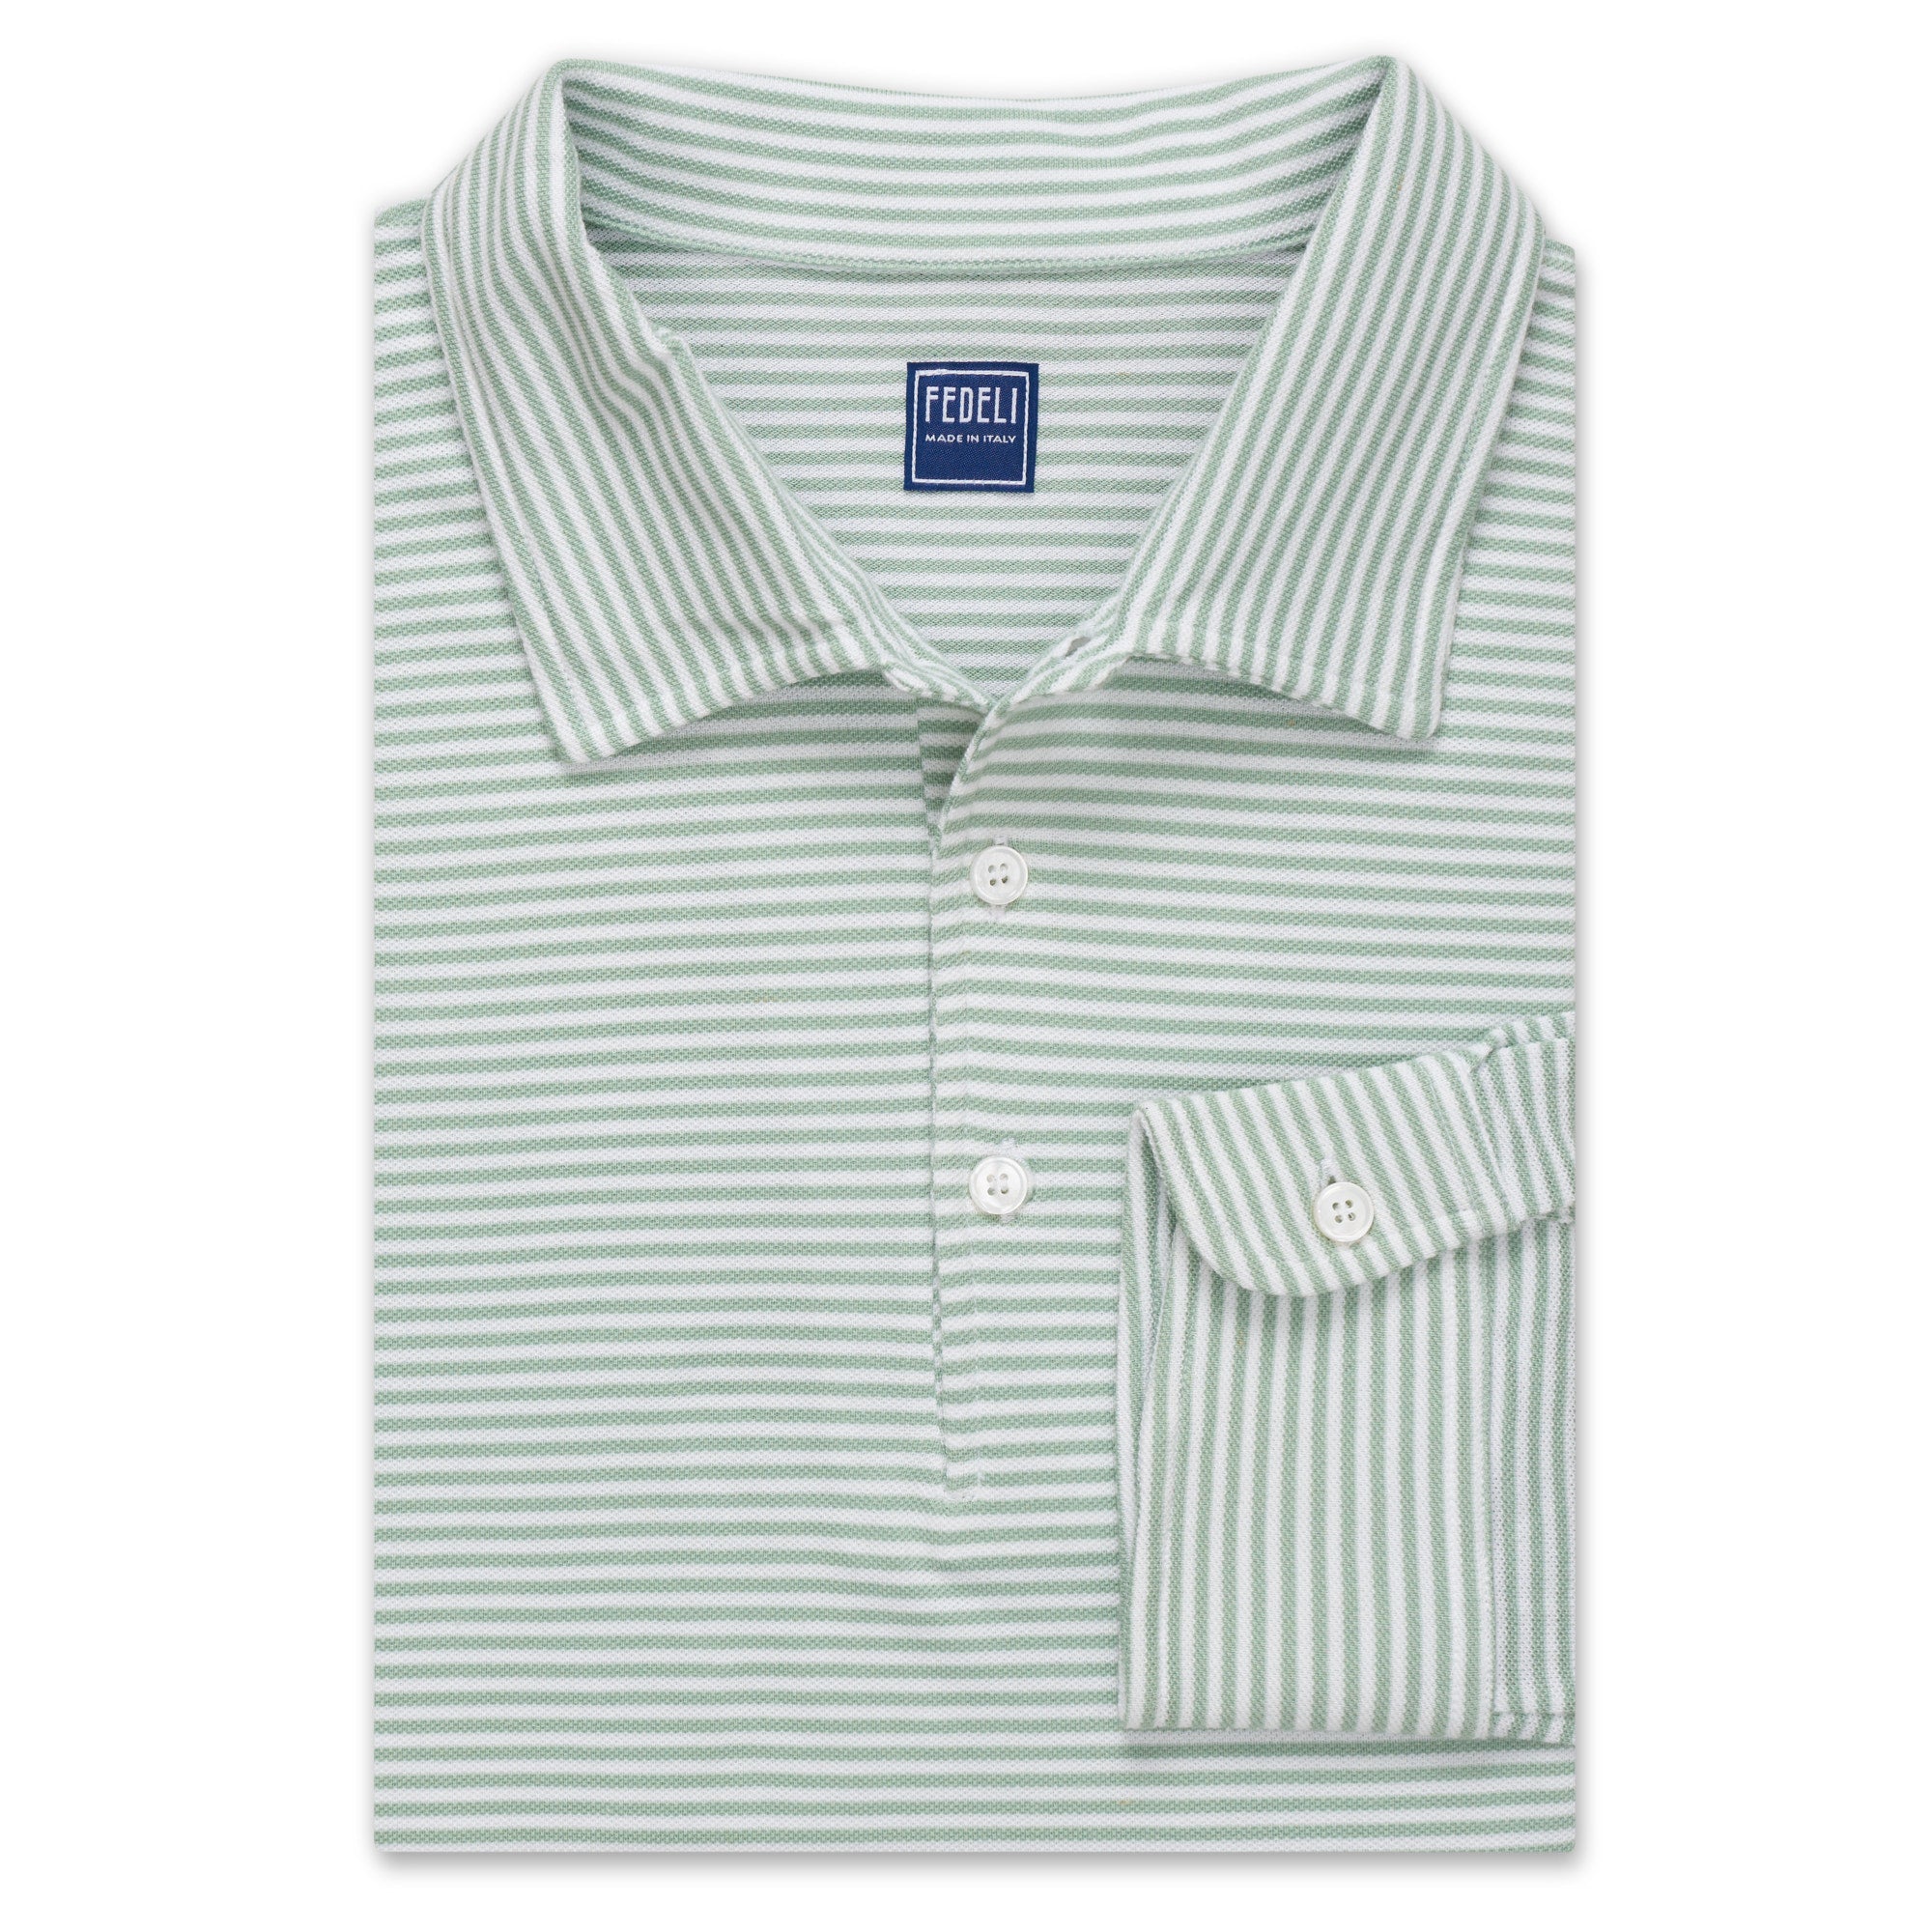 FEDELI Green Striped Cotton Light Pique Long Sleeve Polo Shirt EU 58 NEW US 3XL FEDELI